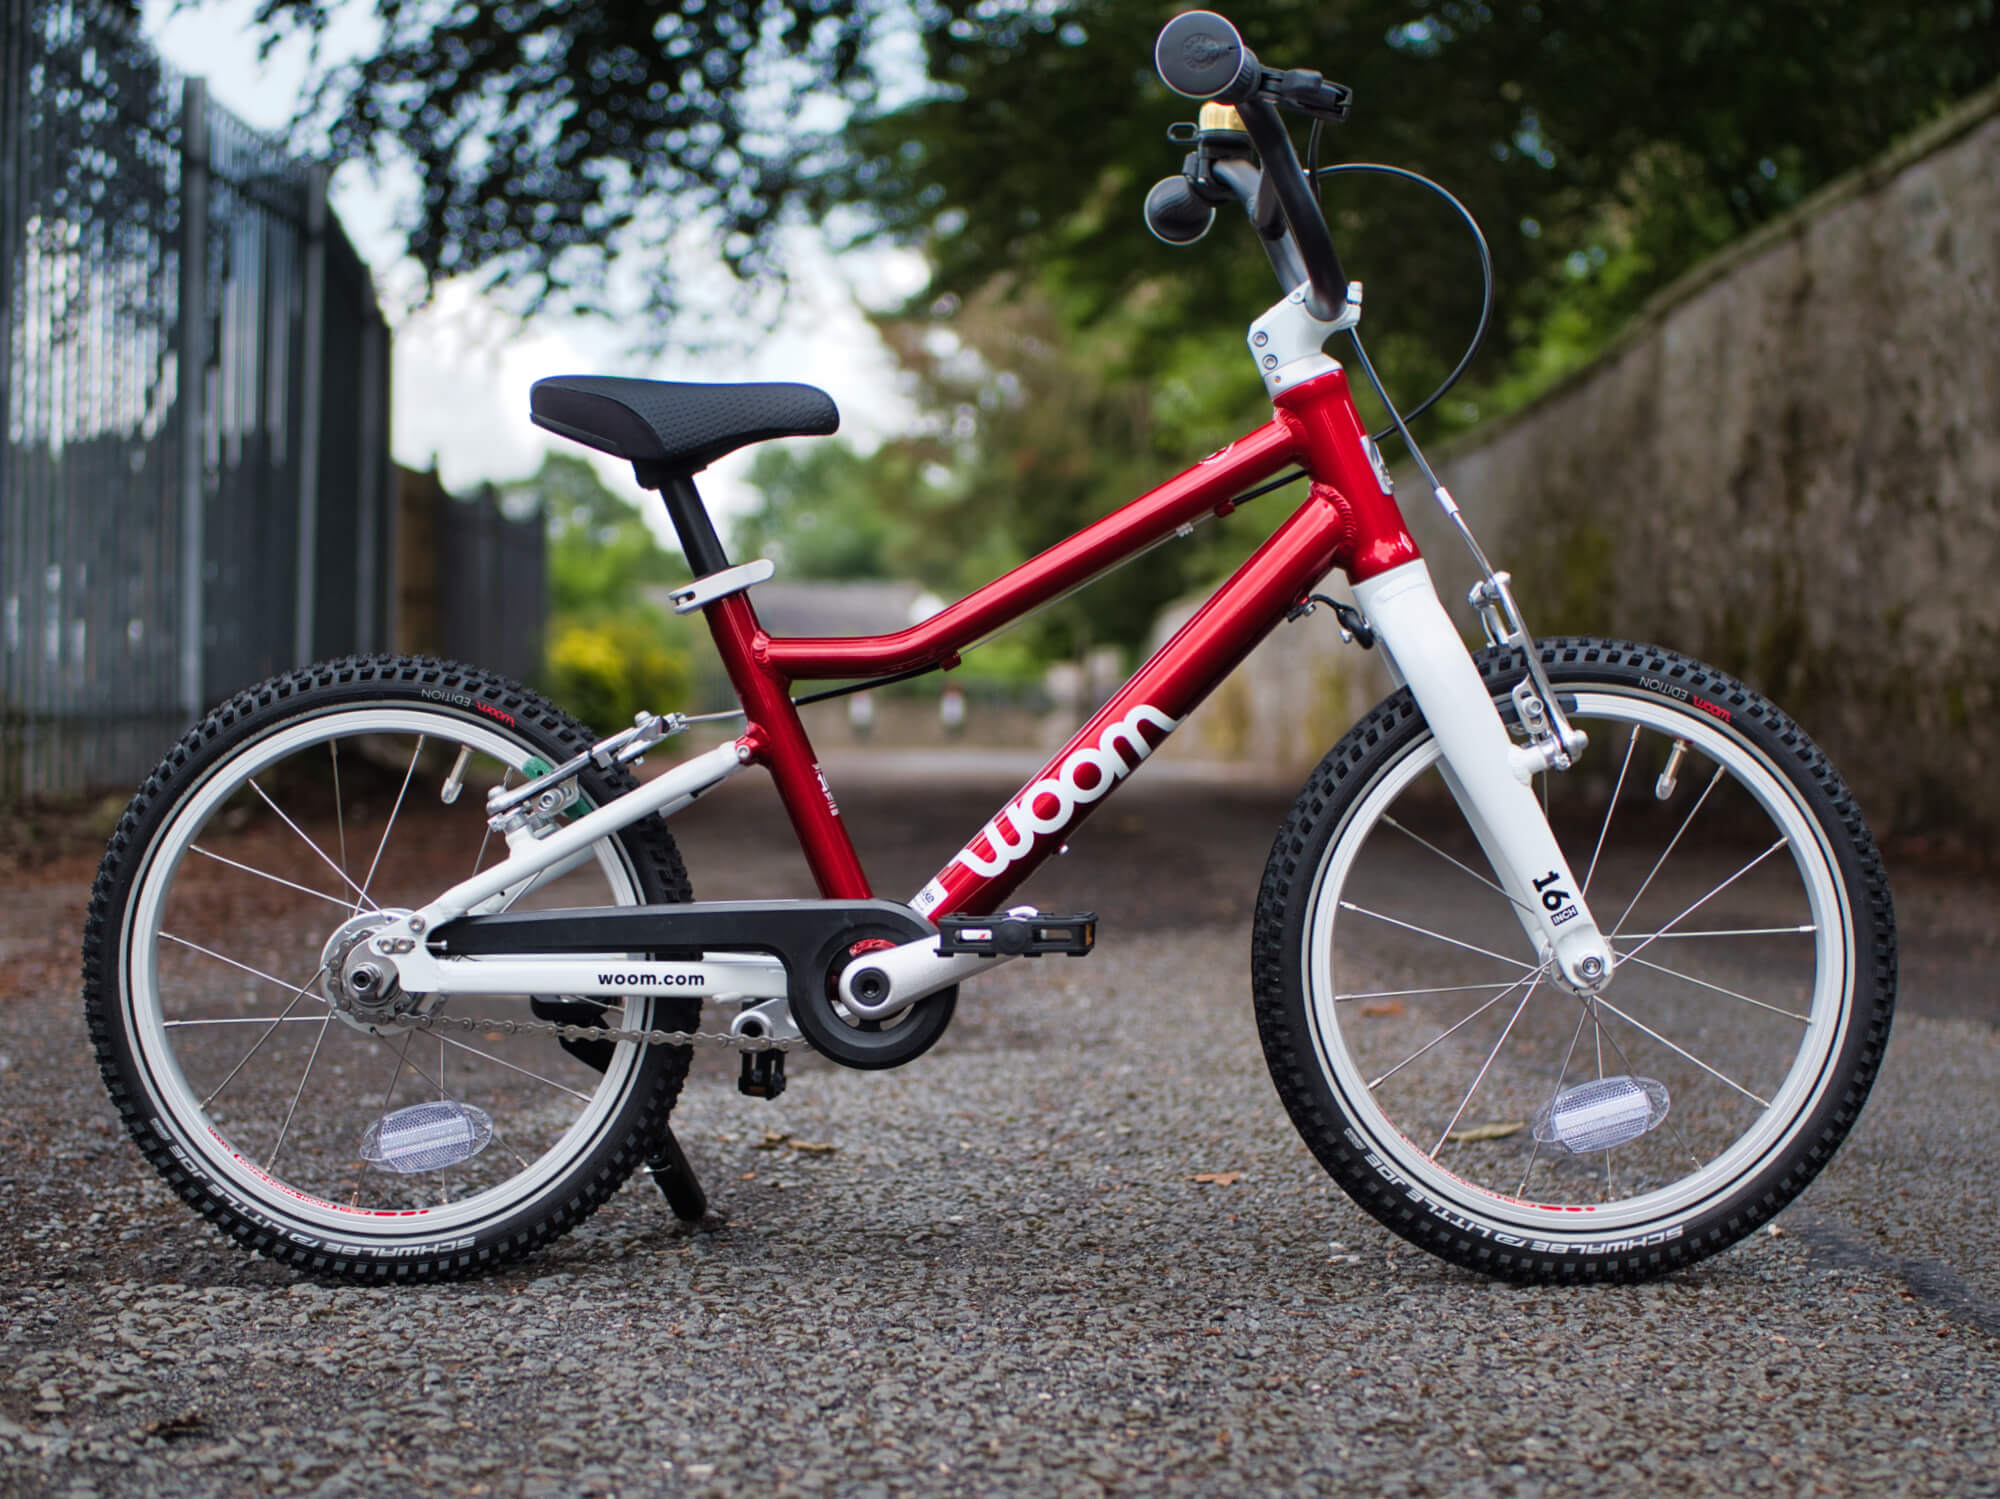 woom 3 automagic kids bike - first impressions review